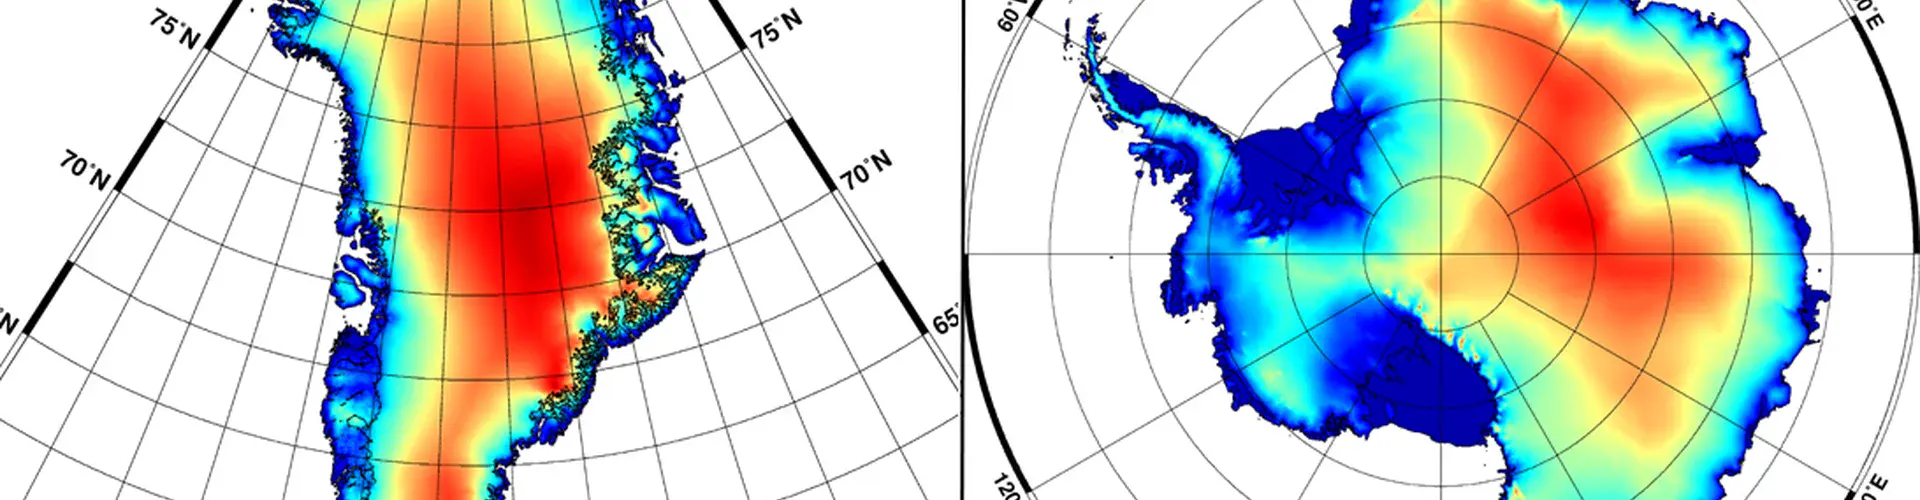 New digital elevation models for Greenland and Antarctica (Credit: Helm et al., The Cryosphere, 2014)